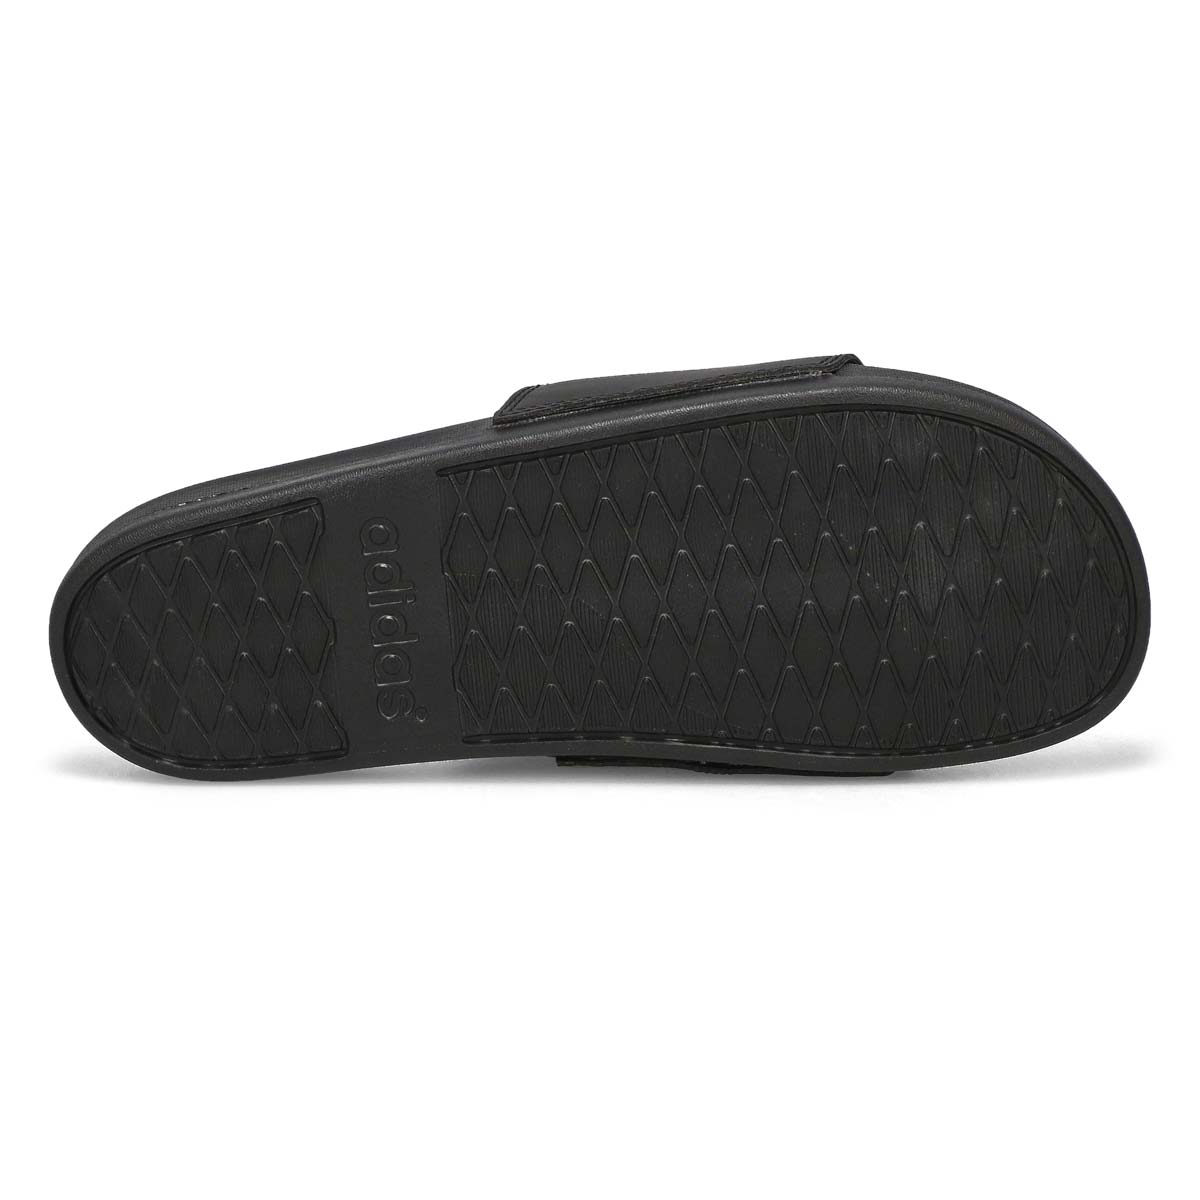 Mens Adlette Comfort Slide Sandal - Black/Gold